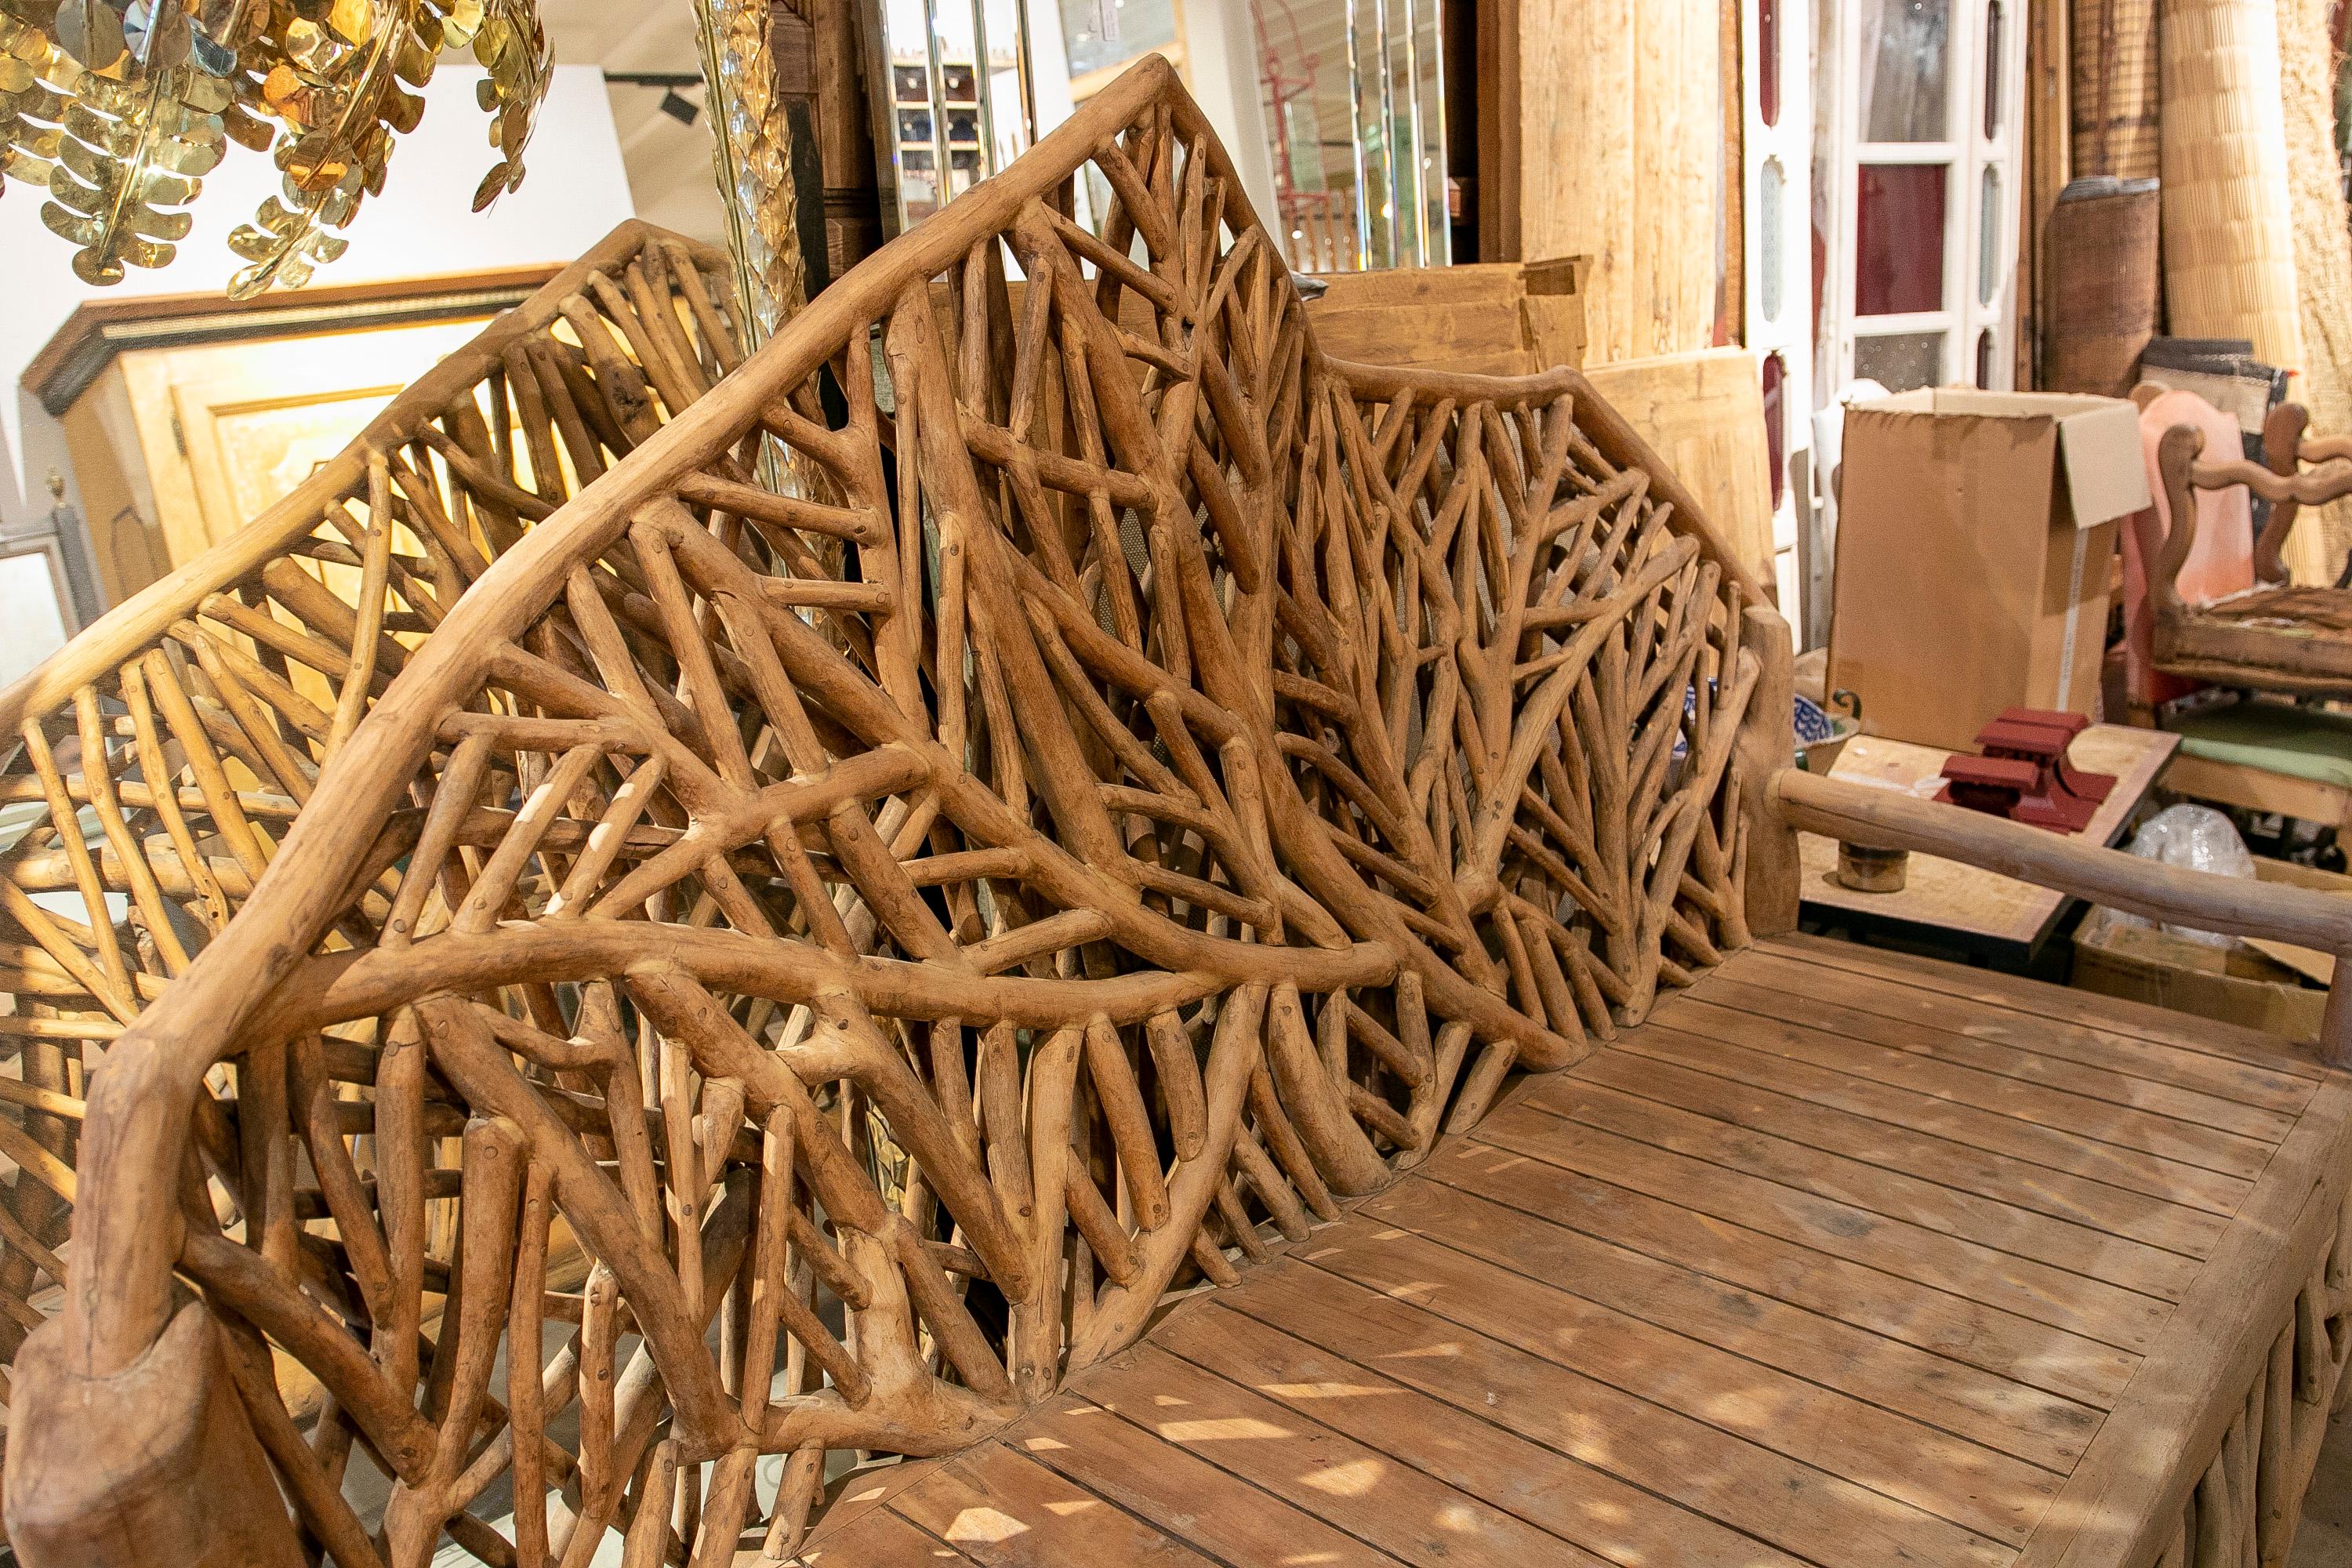 Handmade Wooden Sofa Made of Wooden Logs for the Garden 5